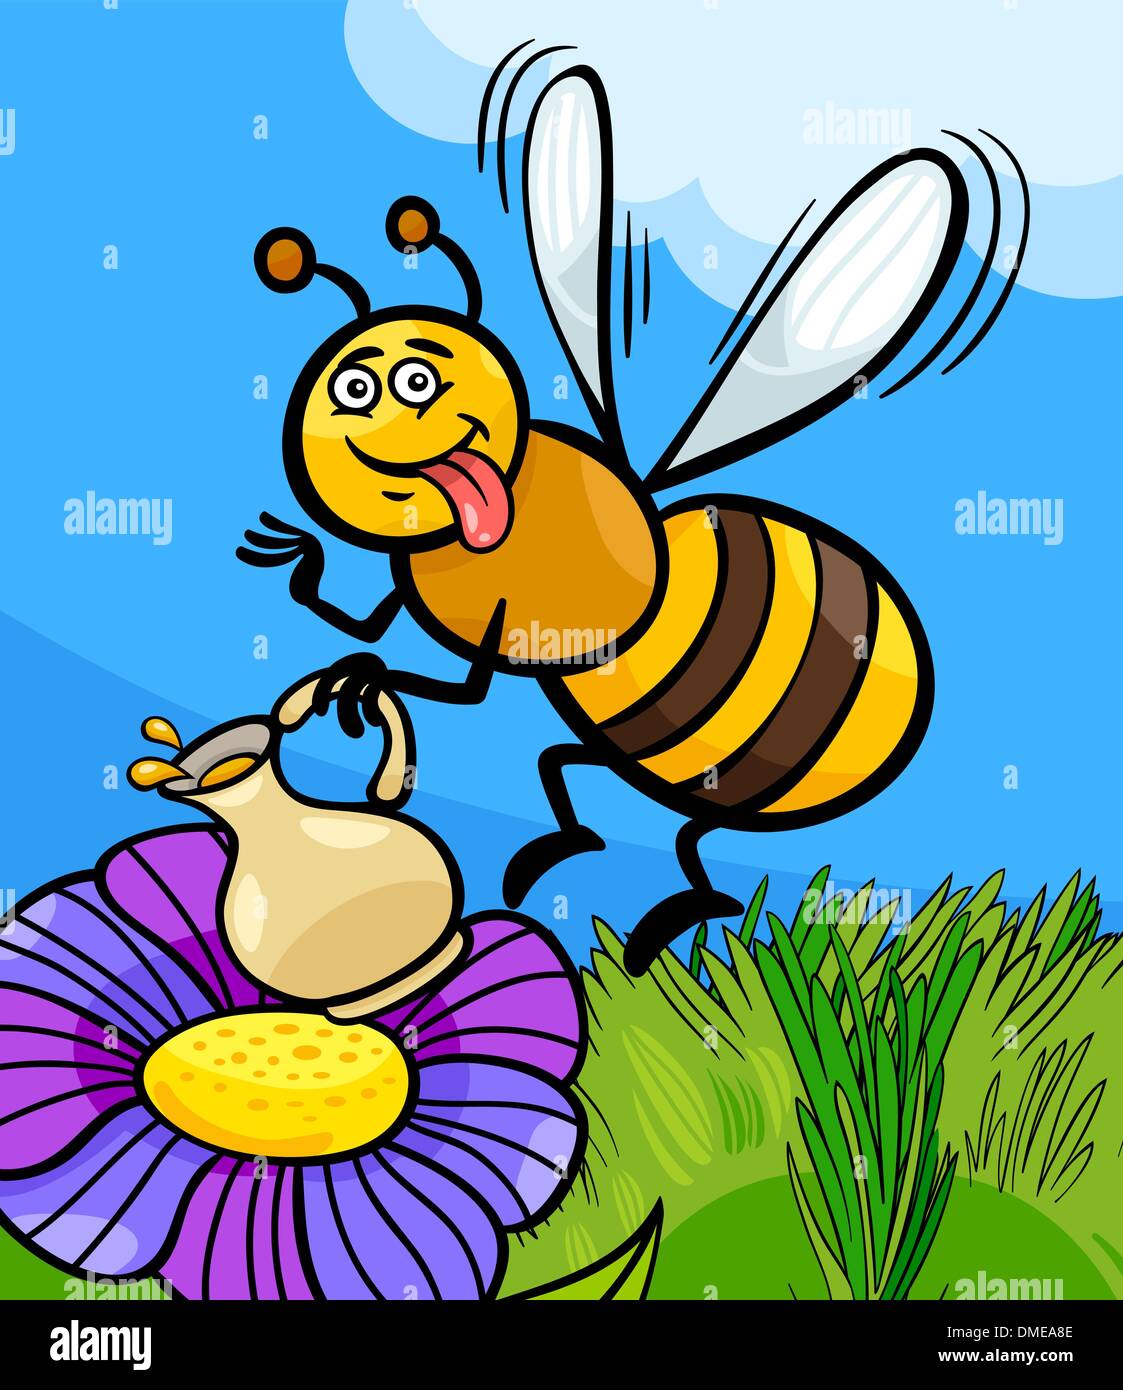 Нектар рисунок. Пчела рисунок. Смешная пчела. Пчелка собирает нектар. Пейзажс пчелкаии.